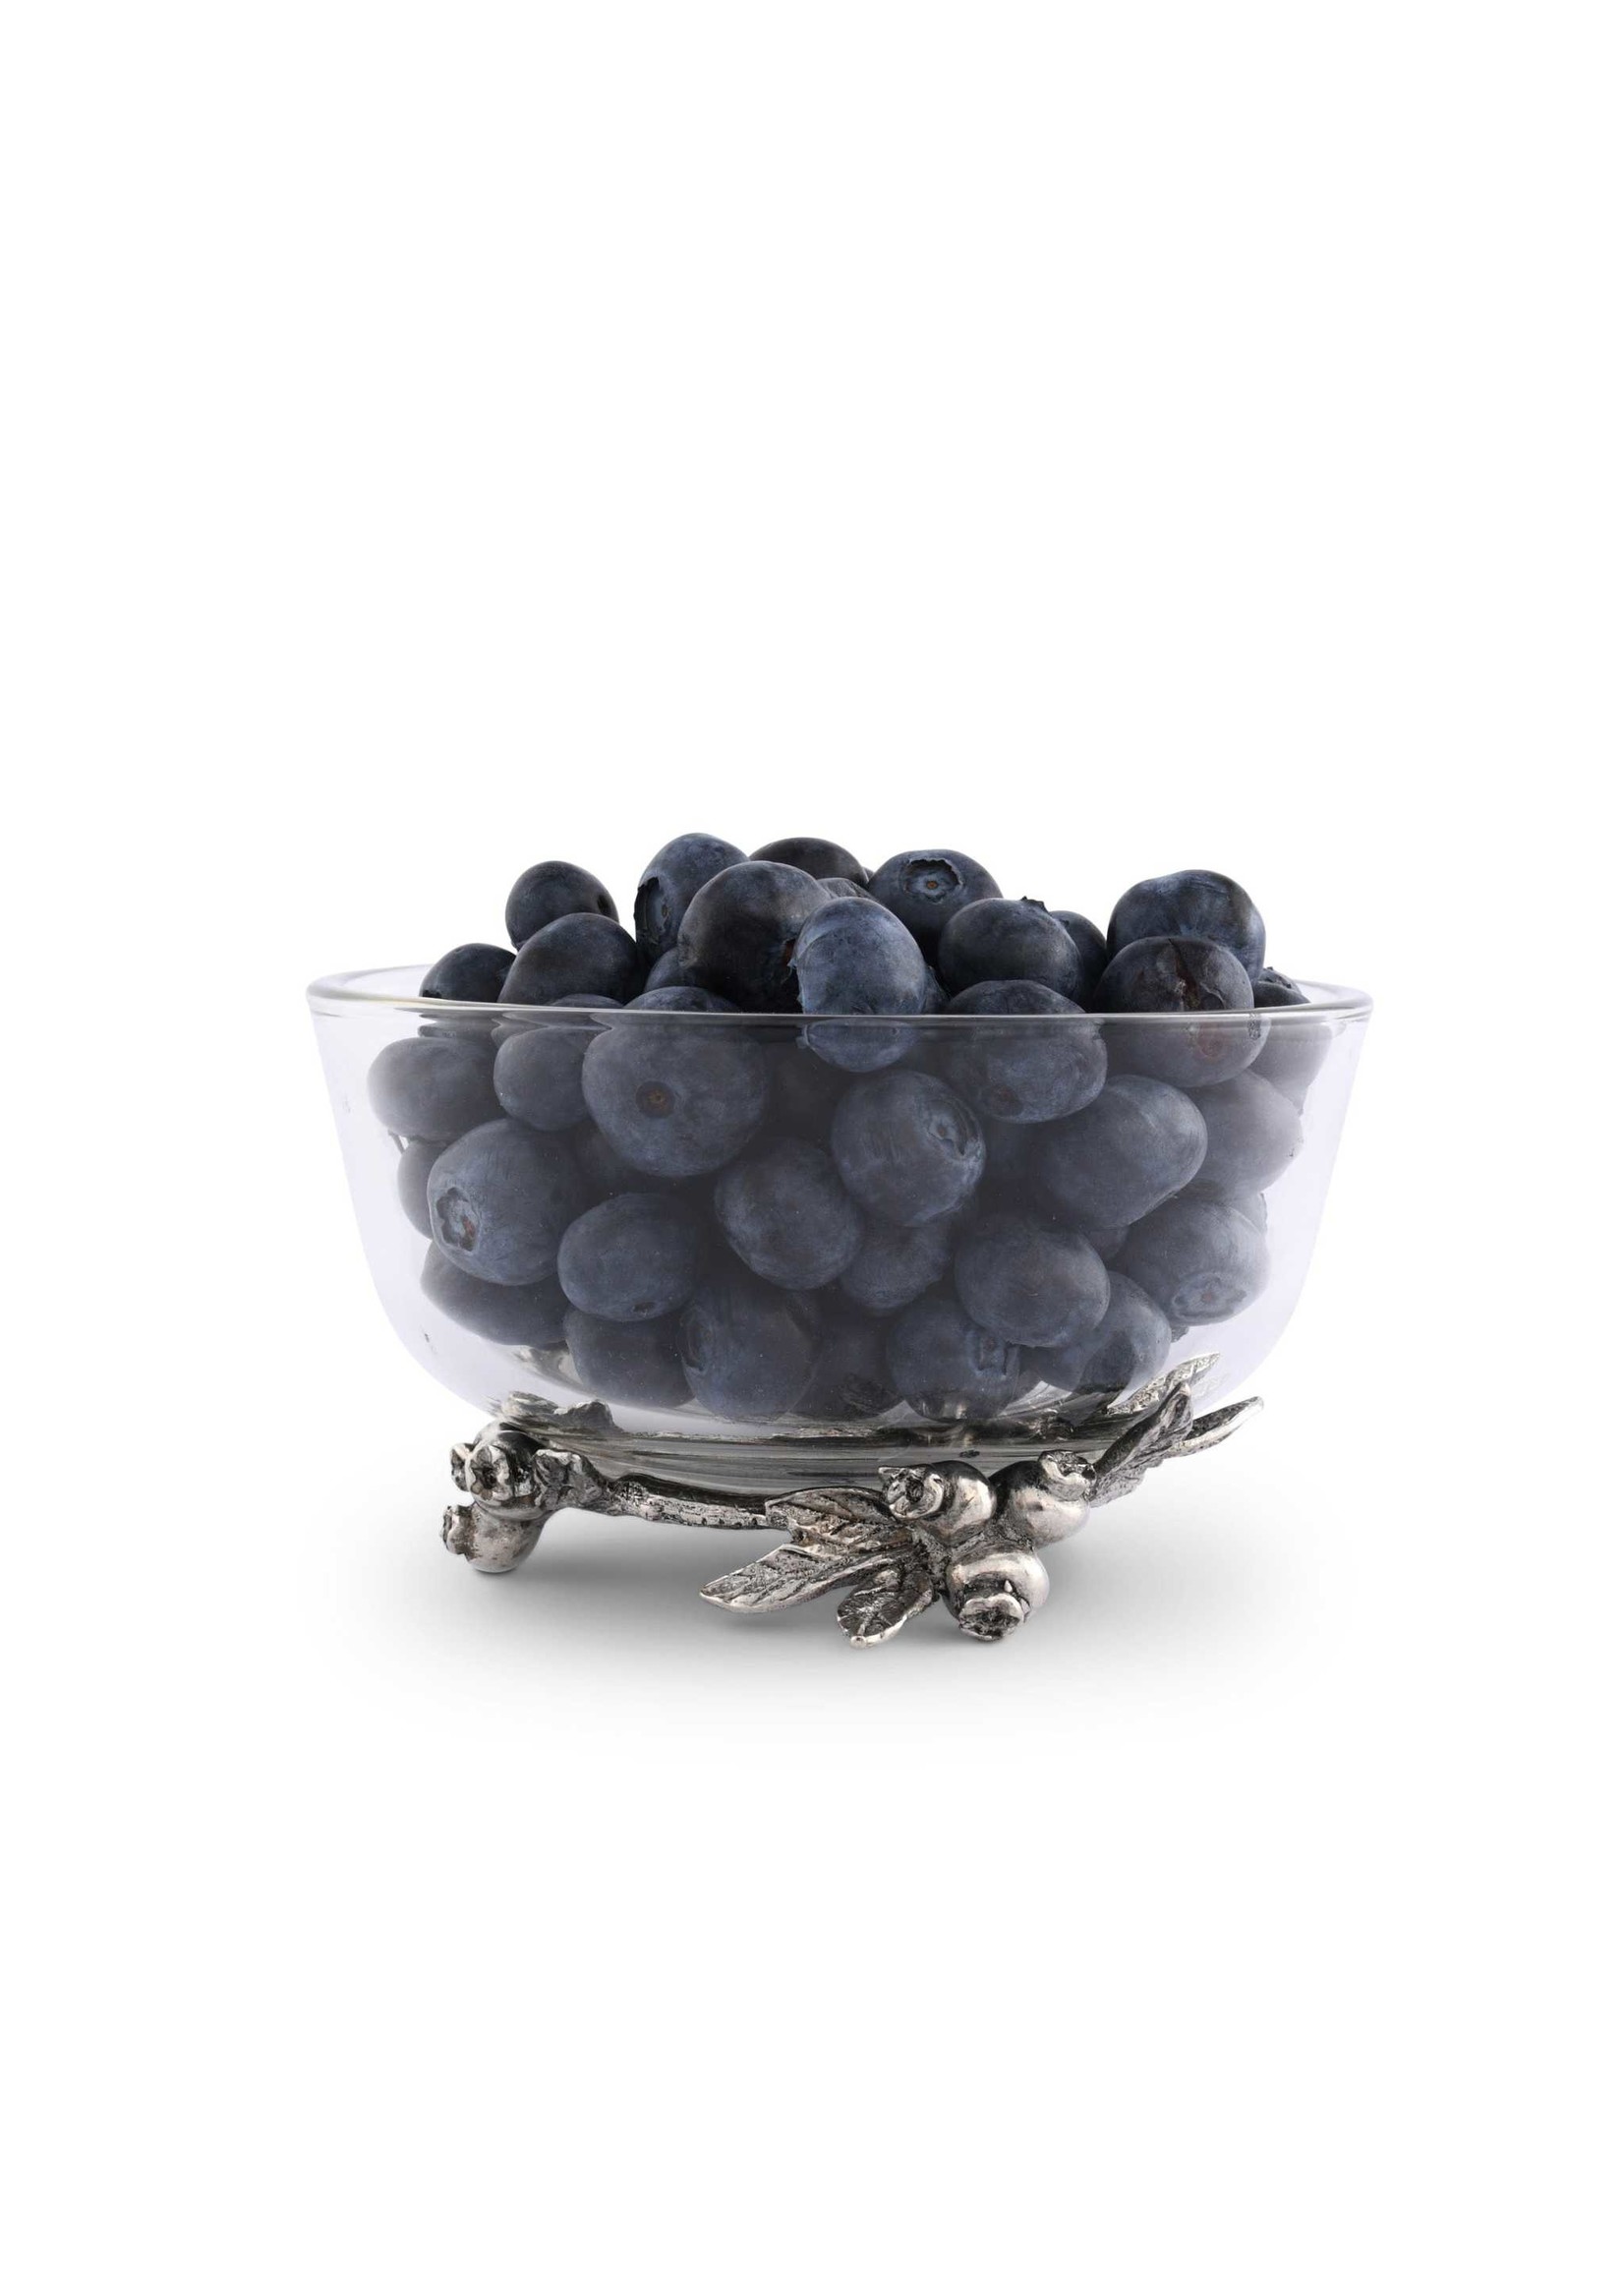 Serving Bowl - Blueberry